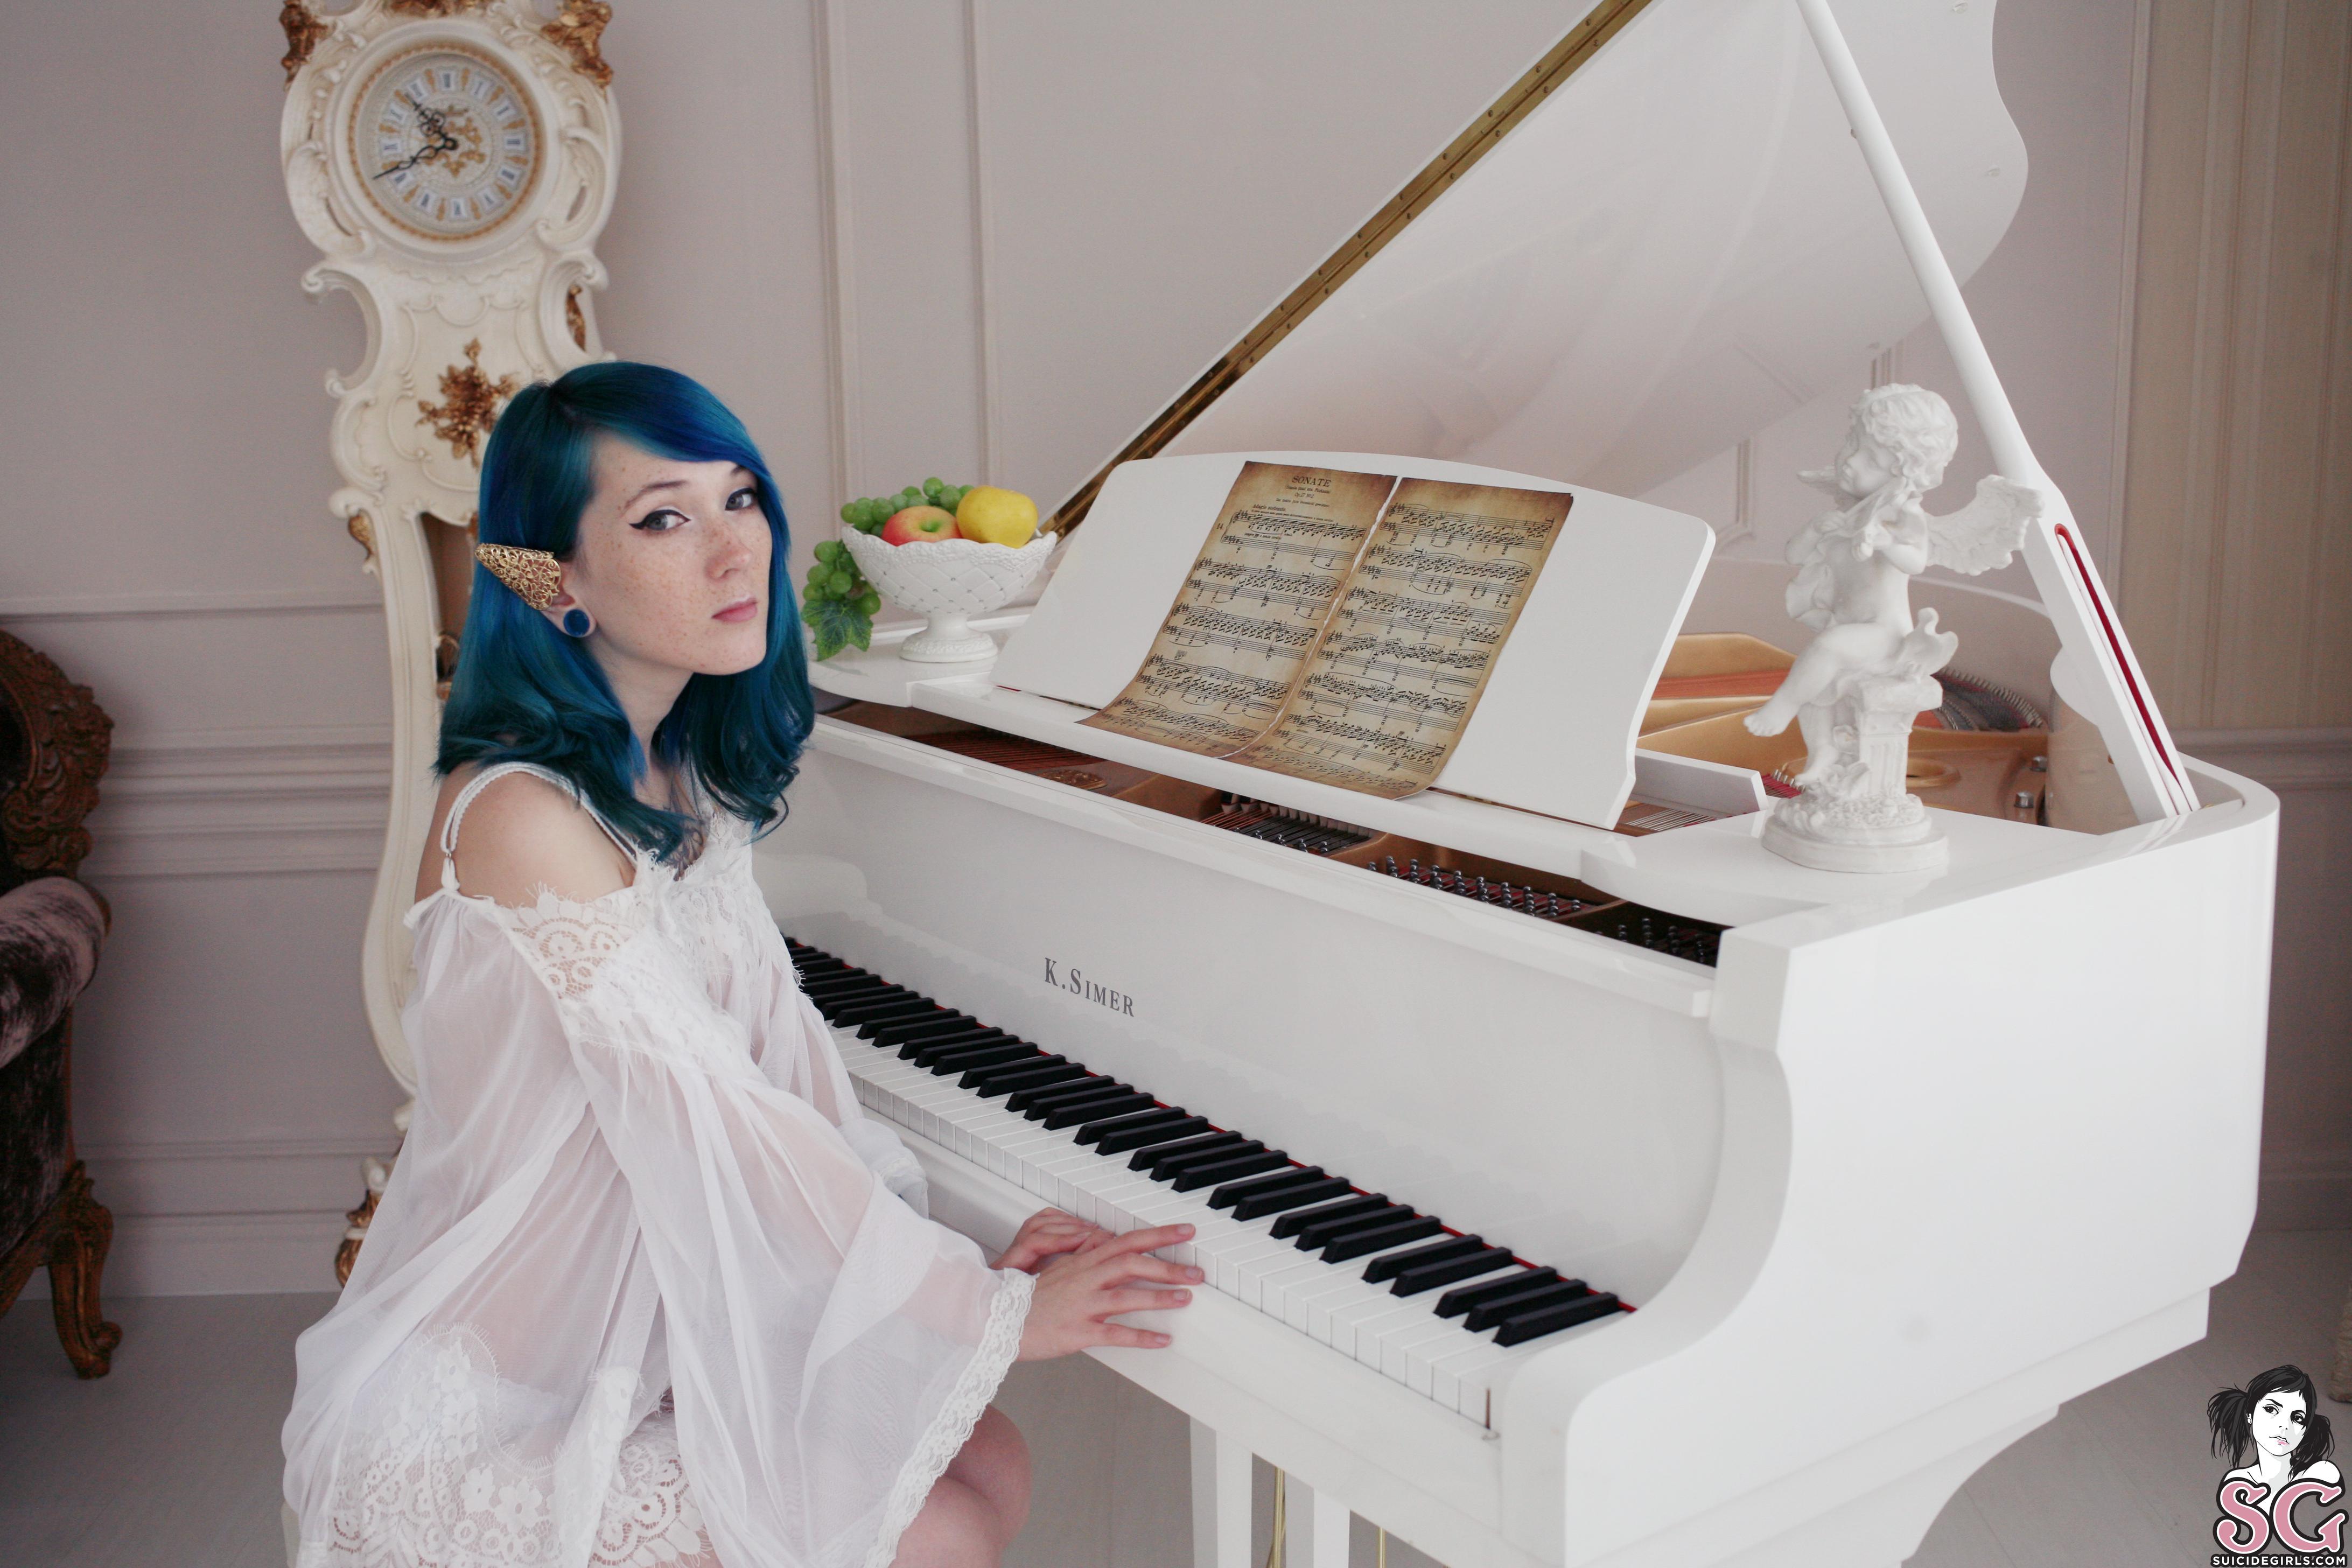 People 4368x2912 Colorfoxx Suicide Girls tattoo blue hair model piano Victorian women women indoors